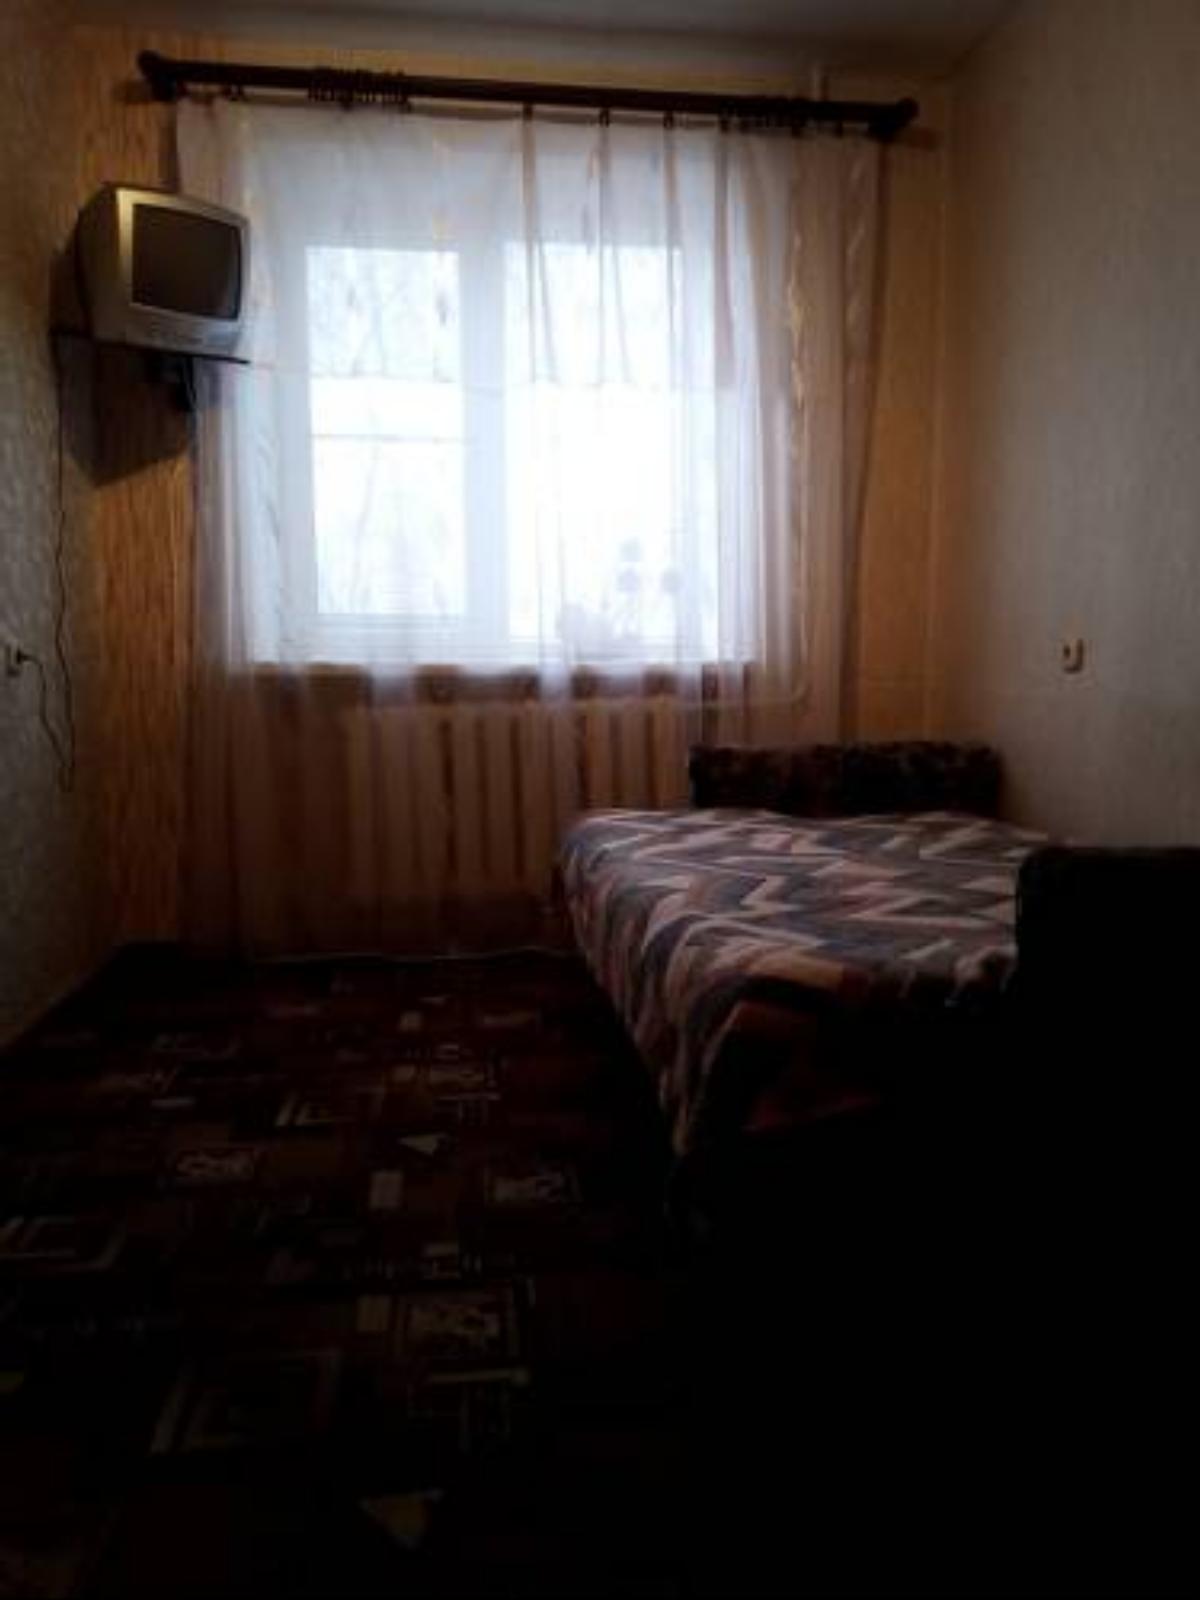 Apartment on Volyntsa 6A Hotel Maladzyechna Belarus